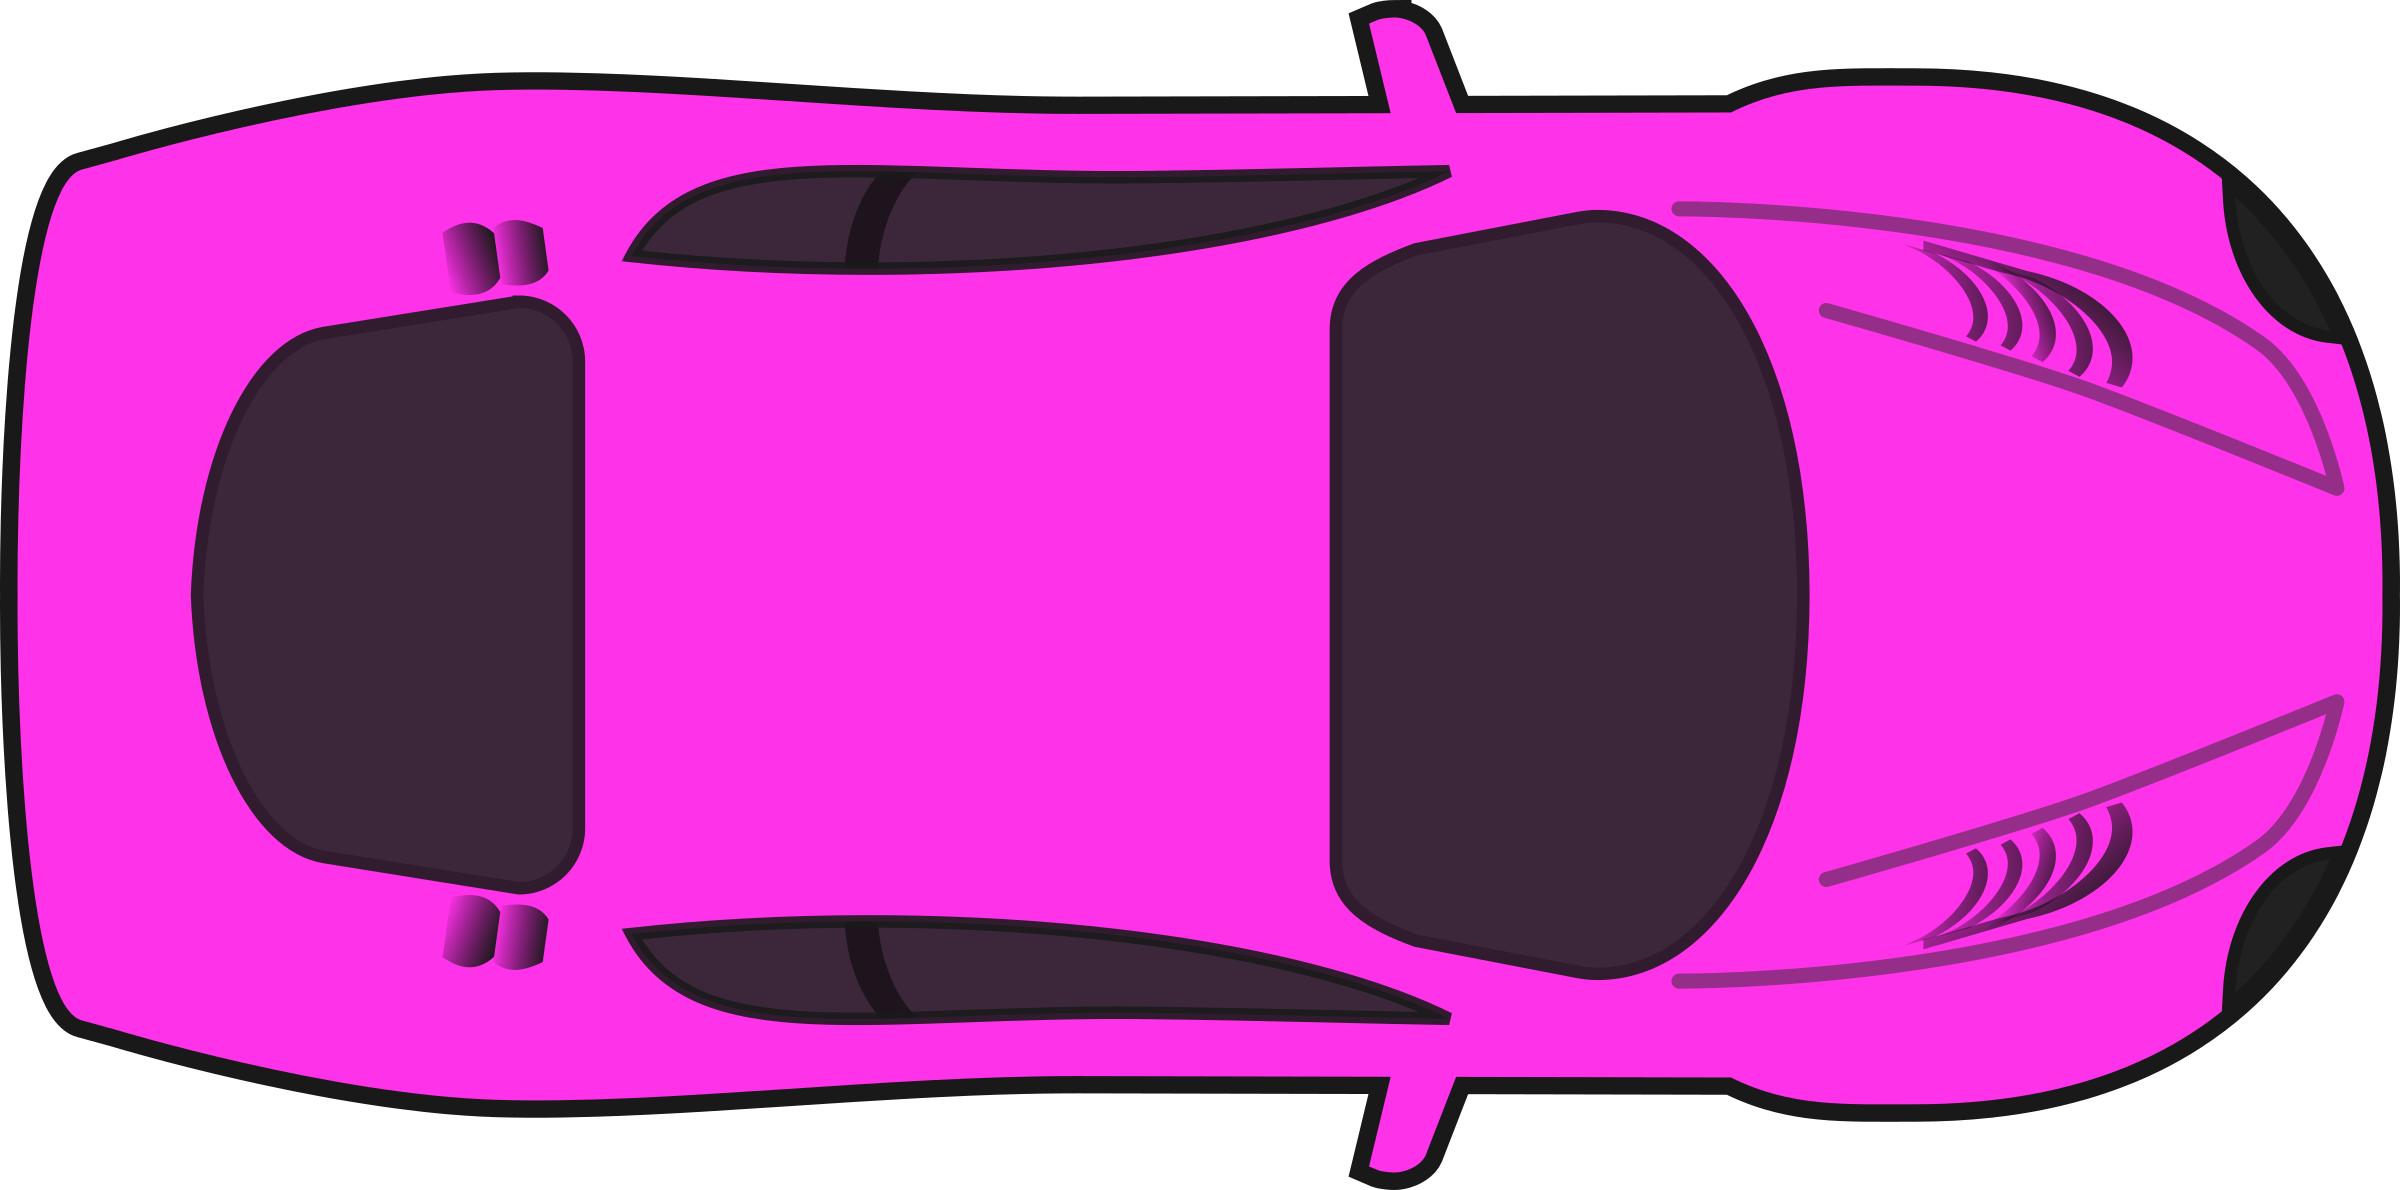 Pink Racing Car (Top View) PNG icons